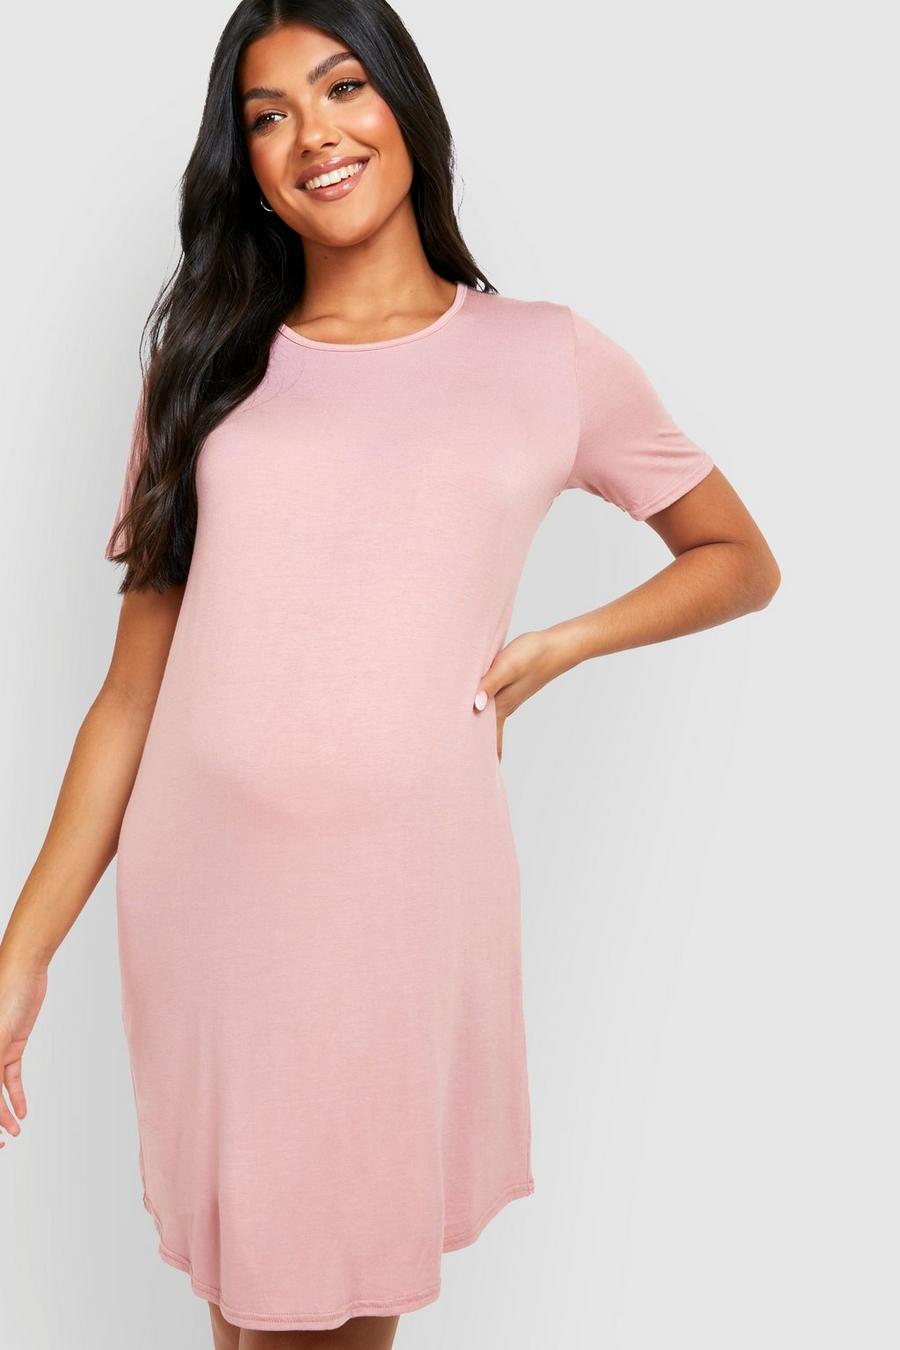 Rose pink Maternity Basic T-Shirt Nightgown